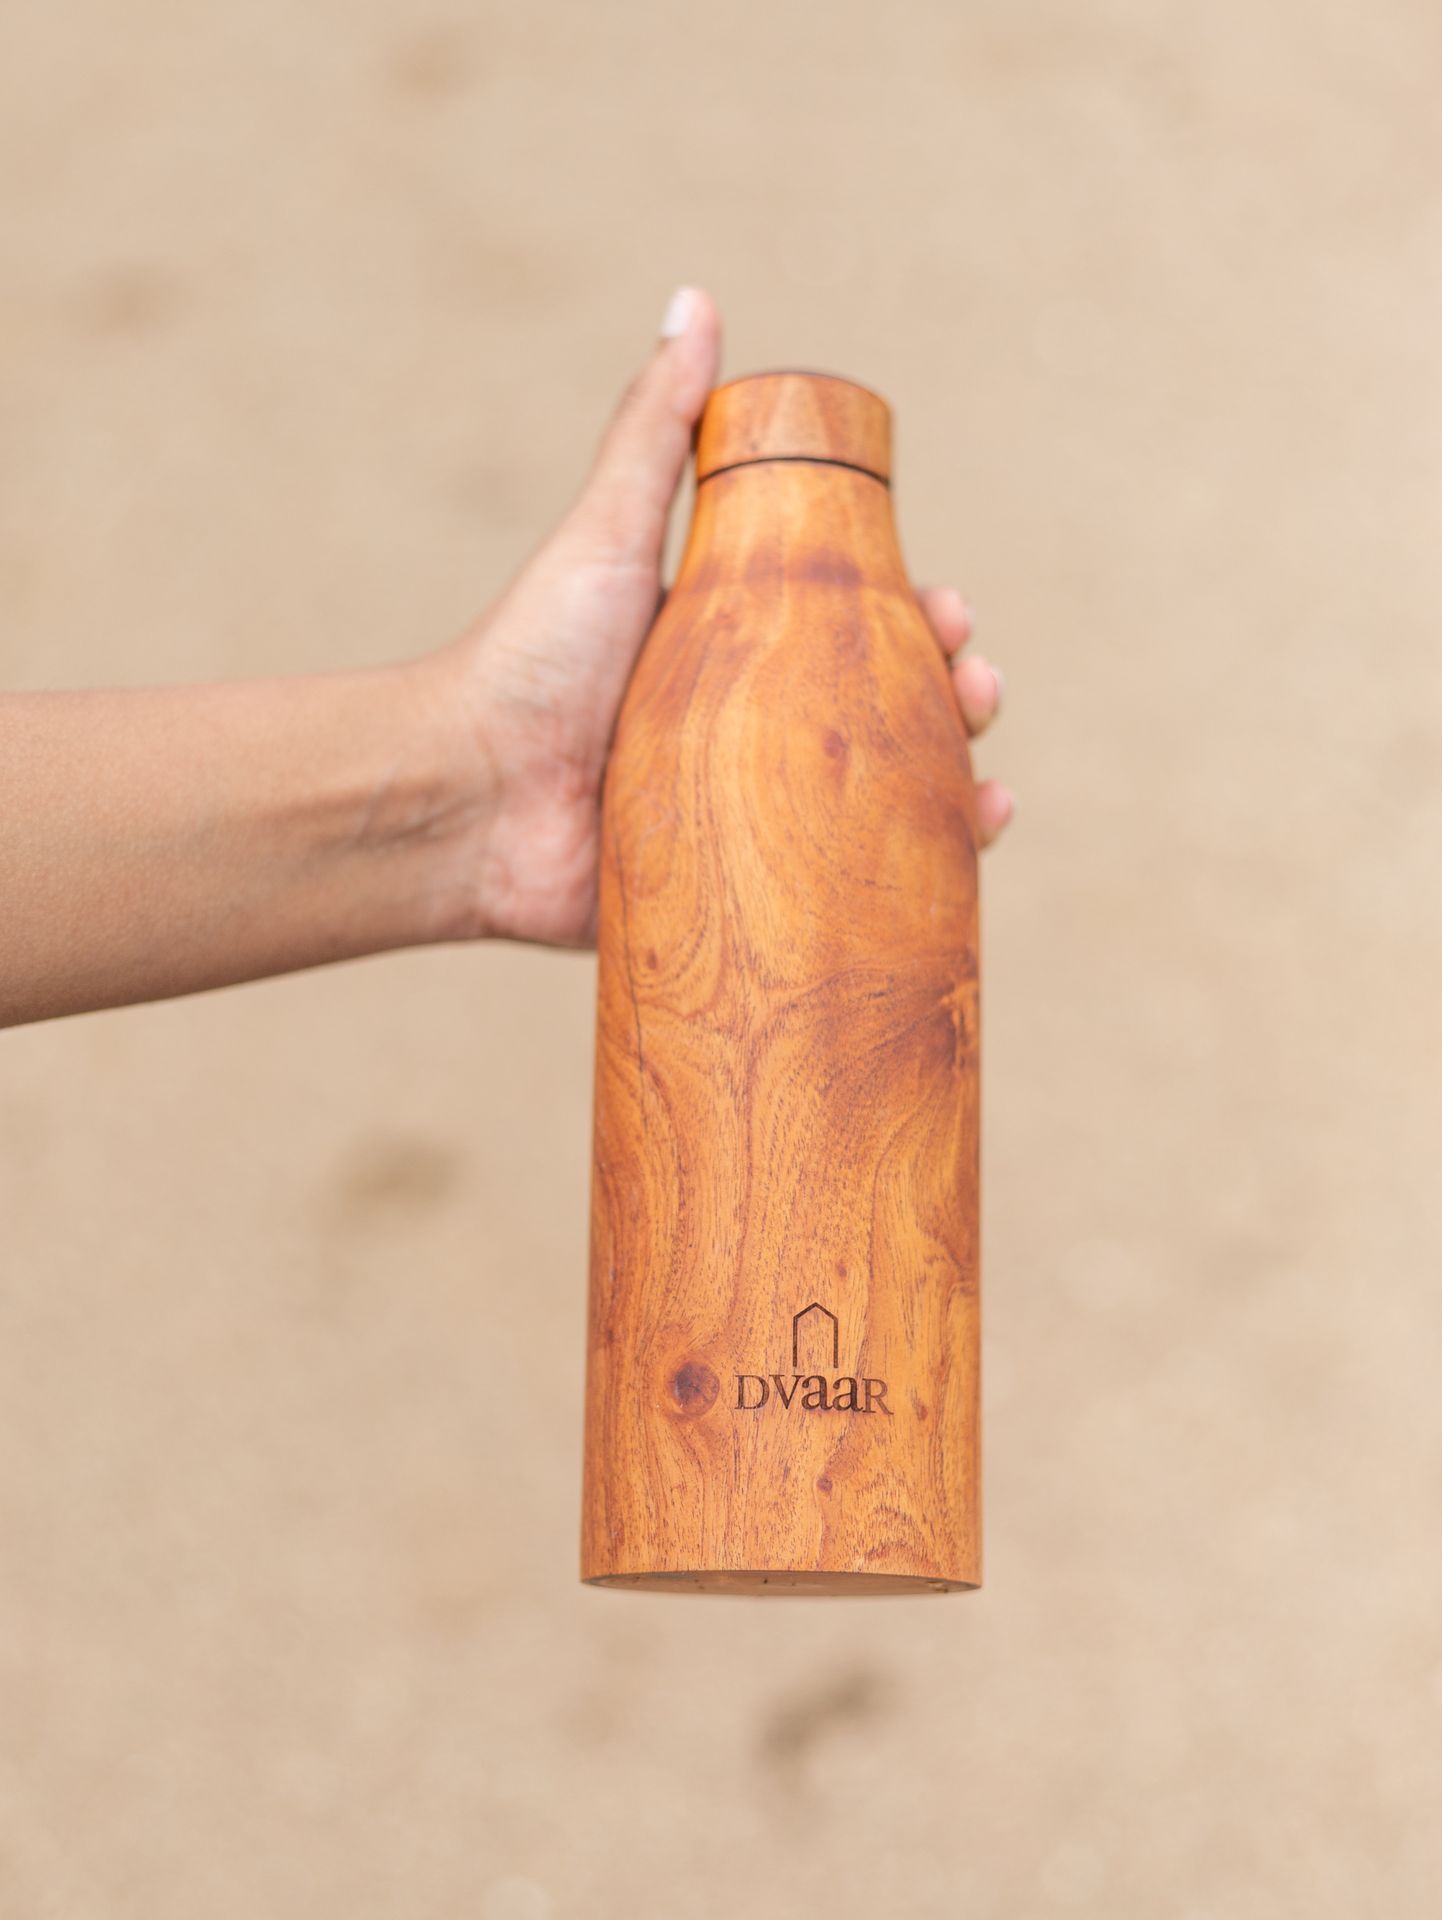 The Wooden Copper Bottle Mahogany Wood 500ml - hfnl!fe